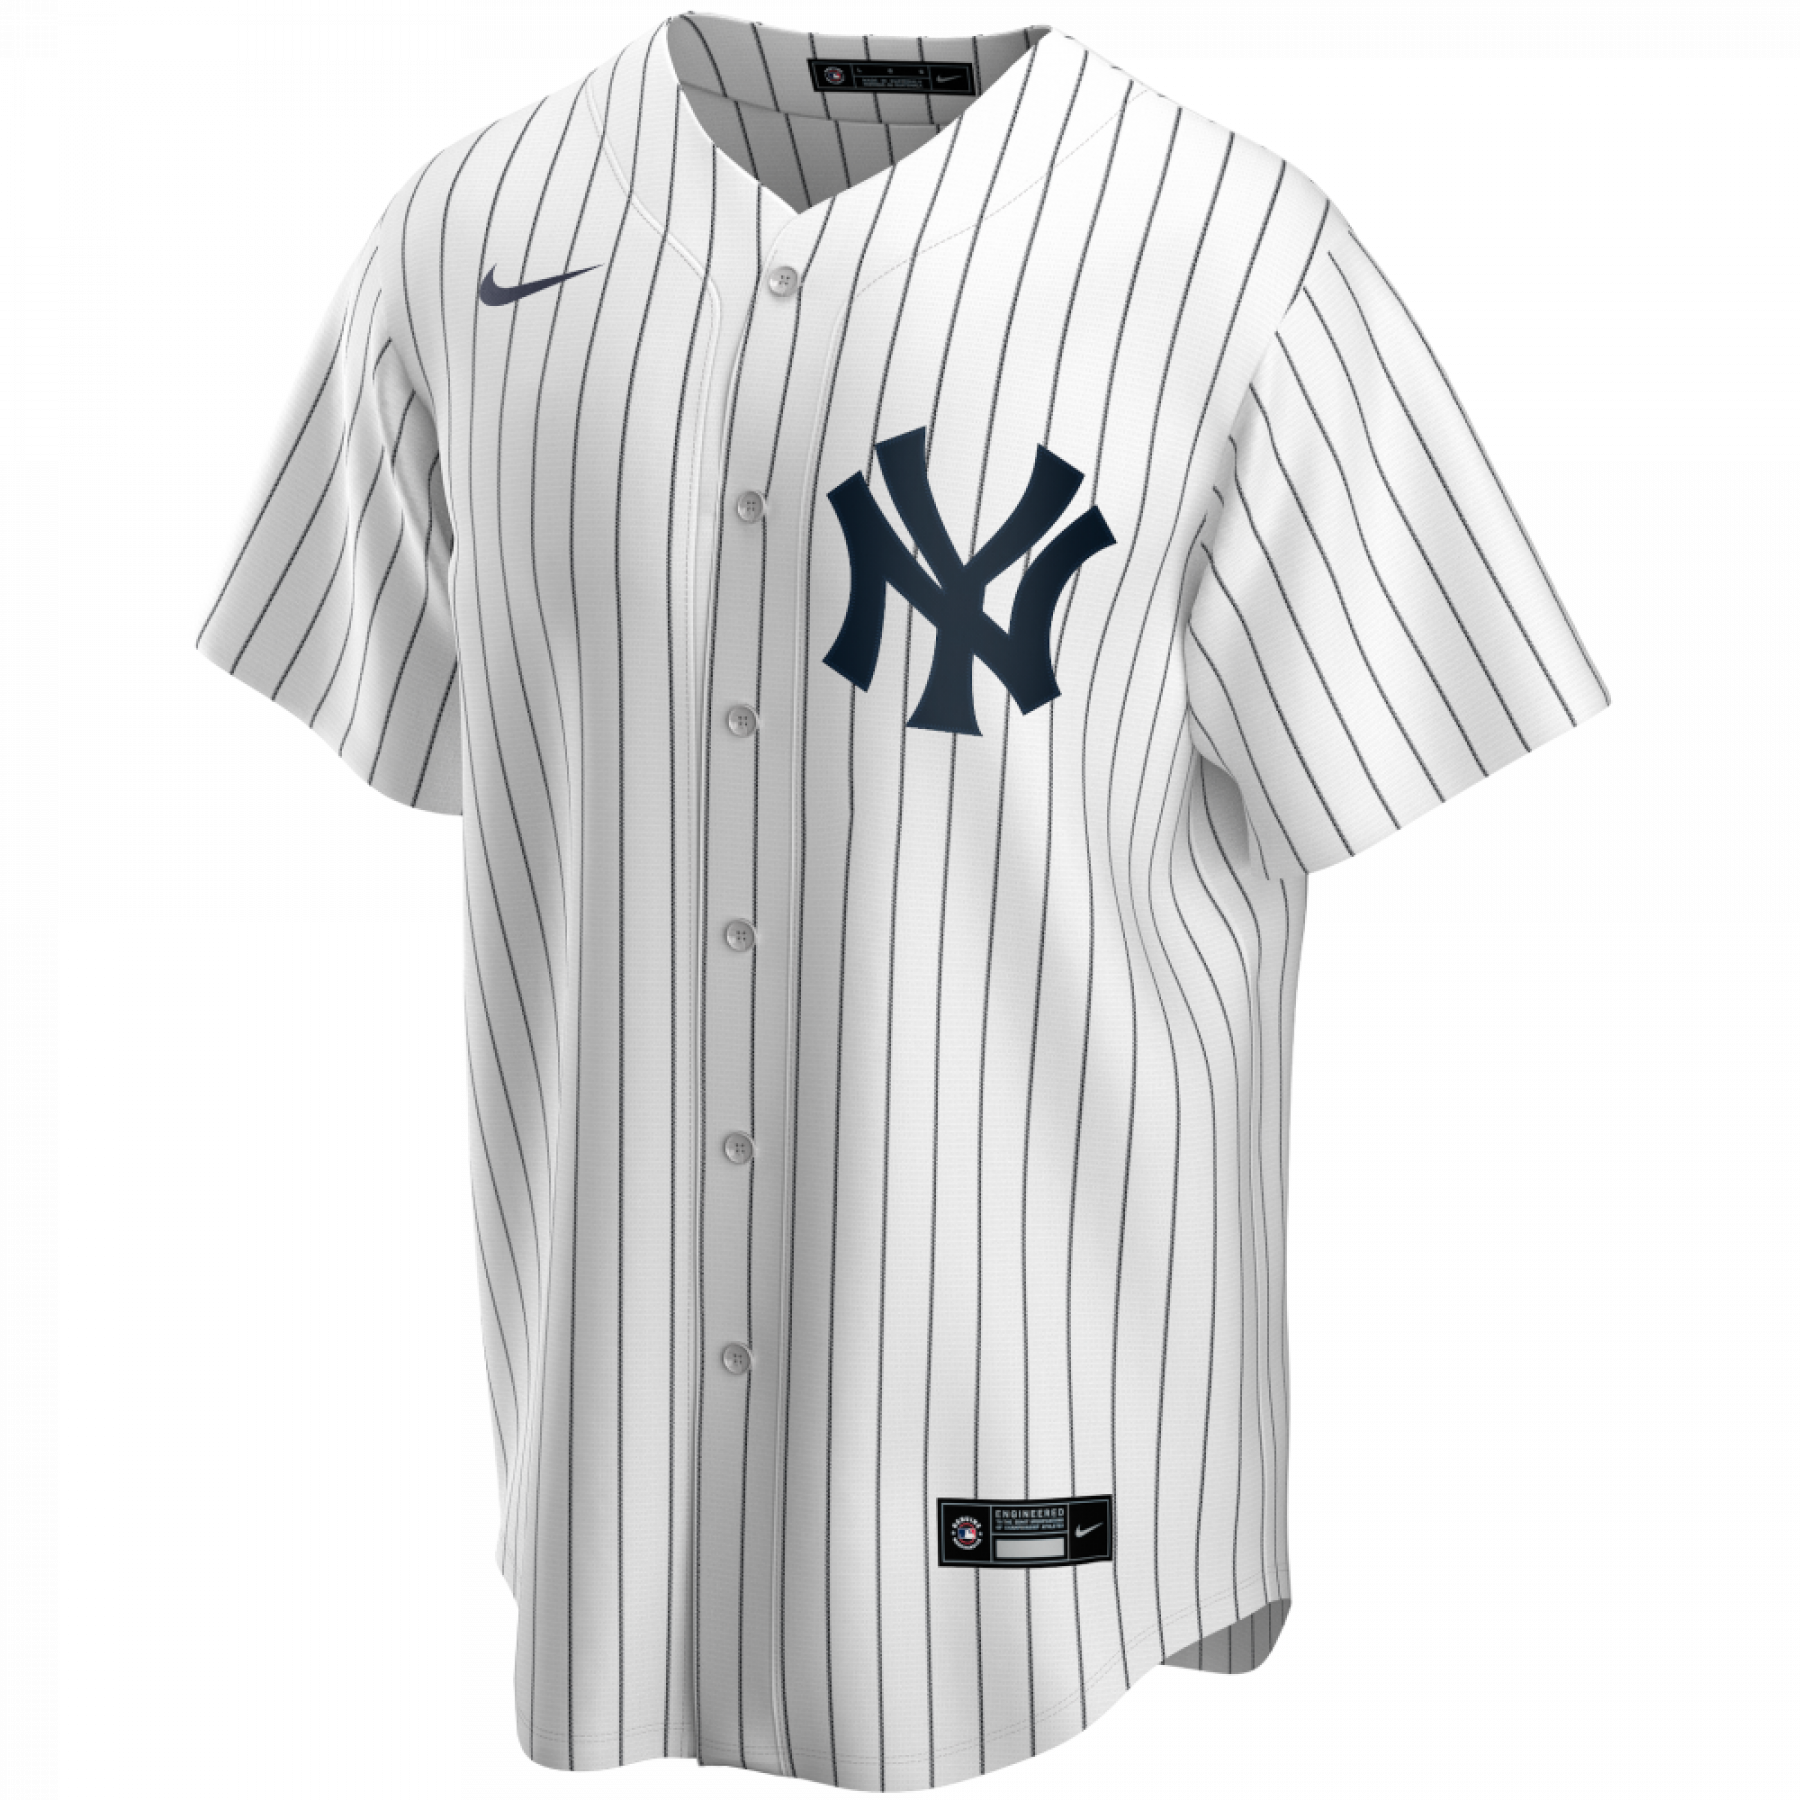 Offizielle Replik New York Yankees Trikot